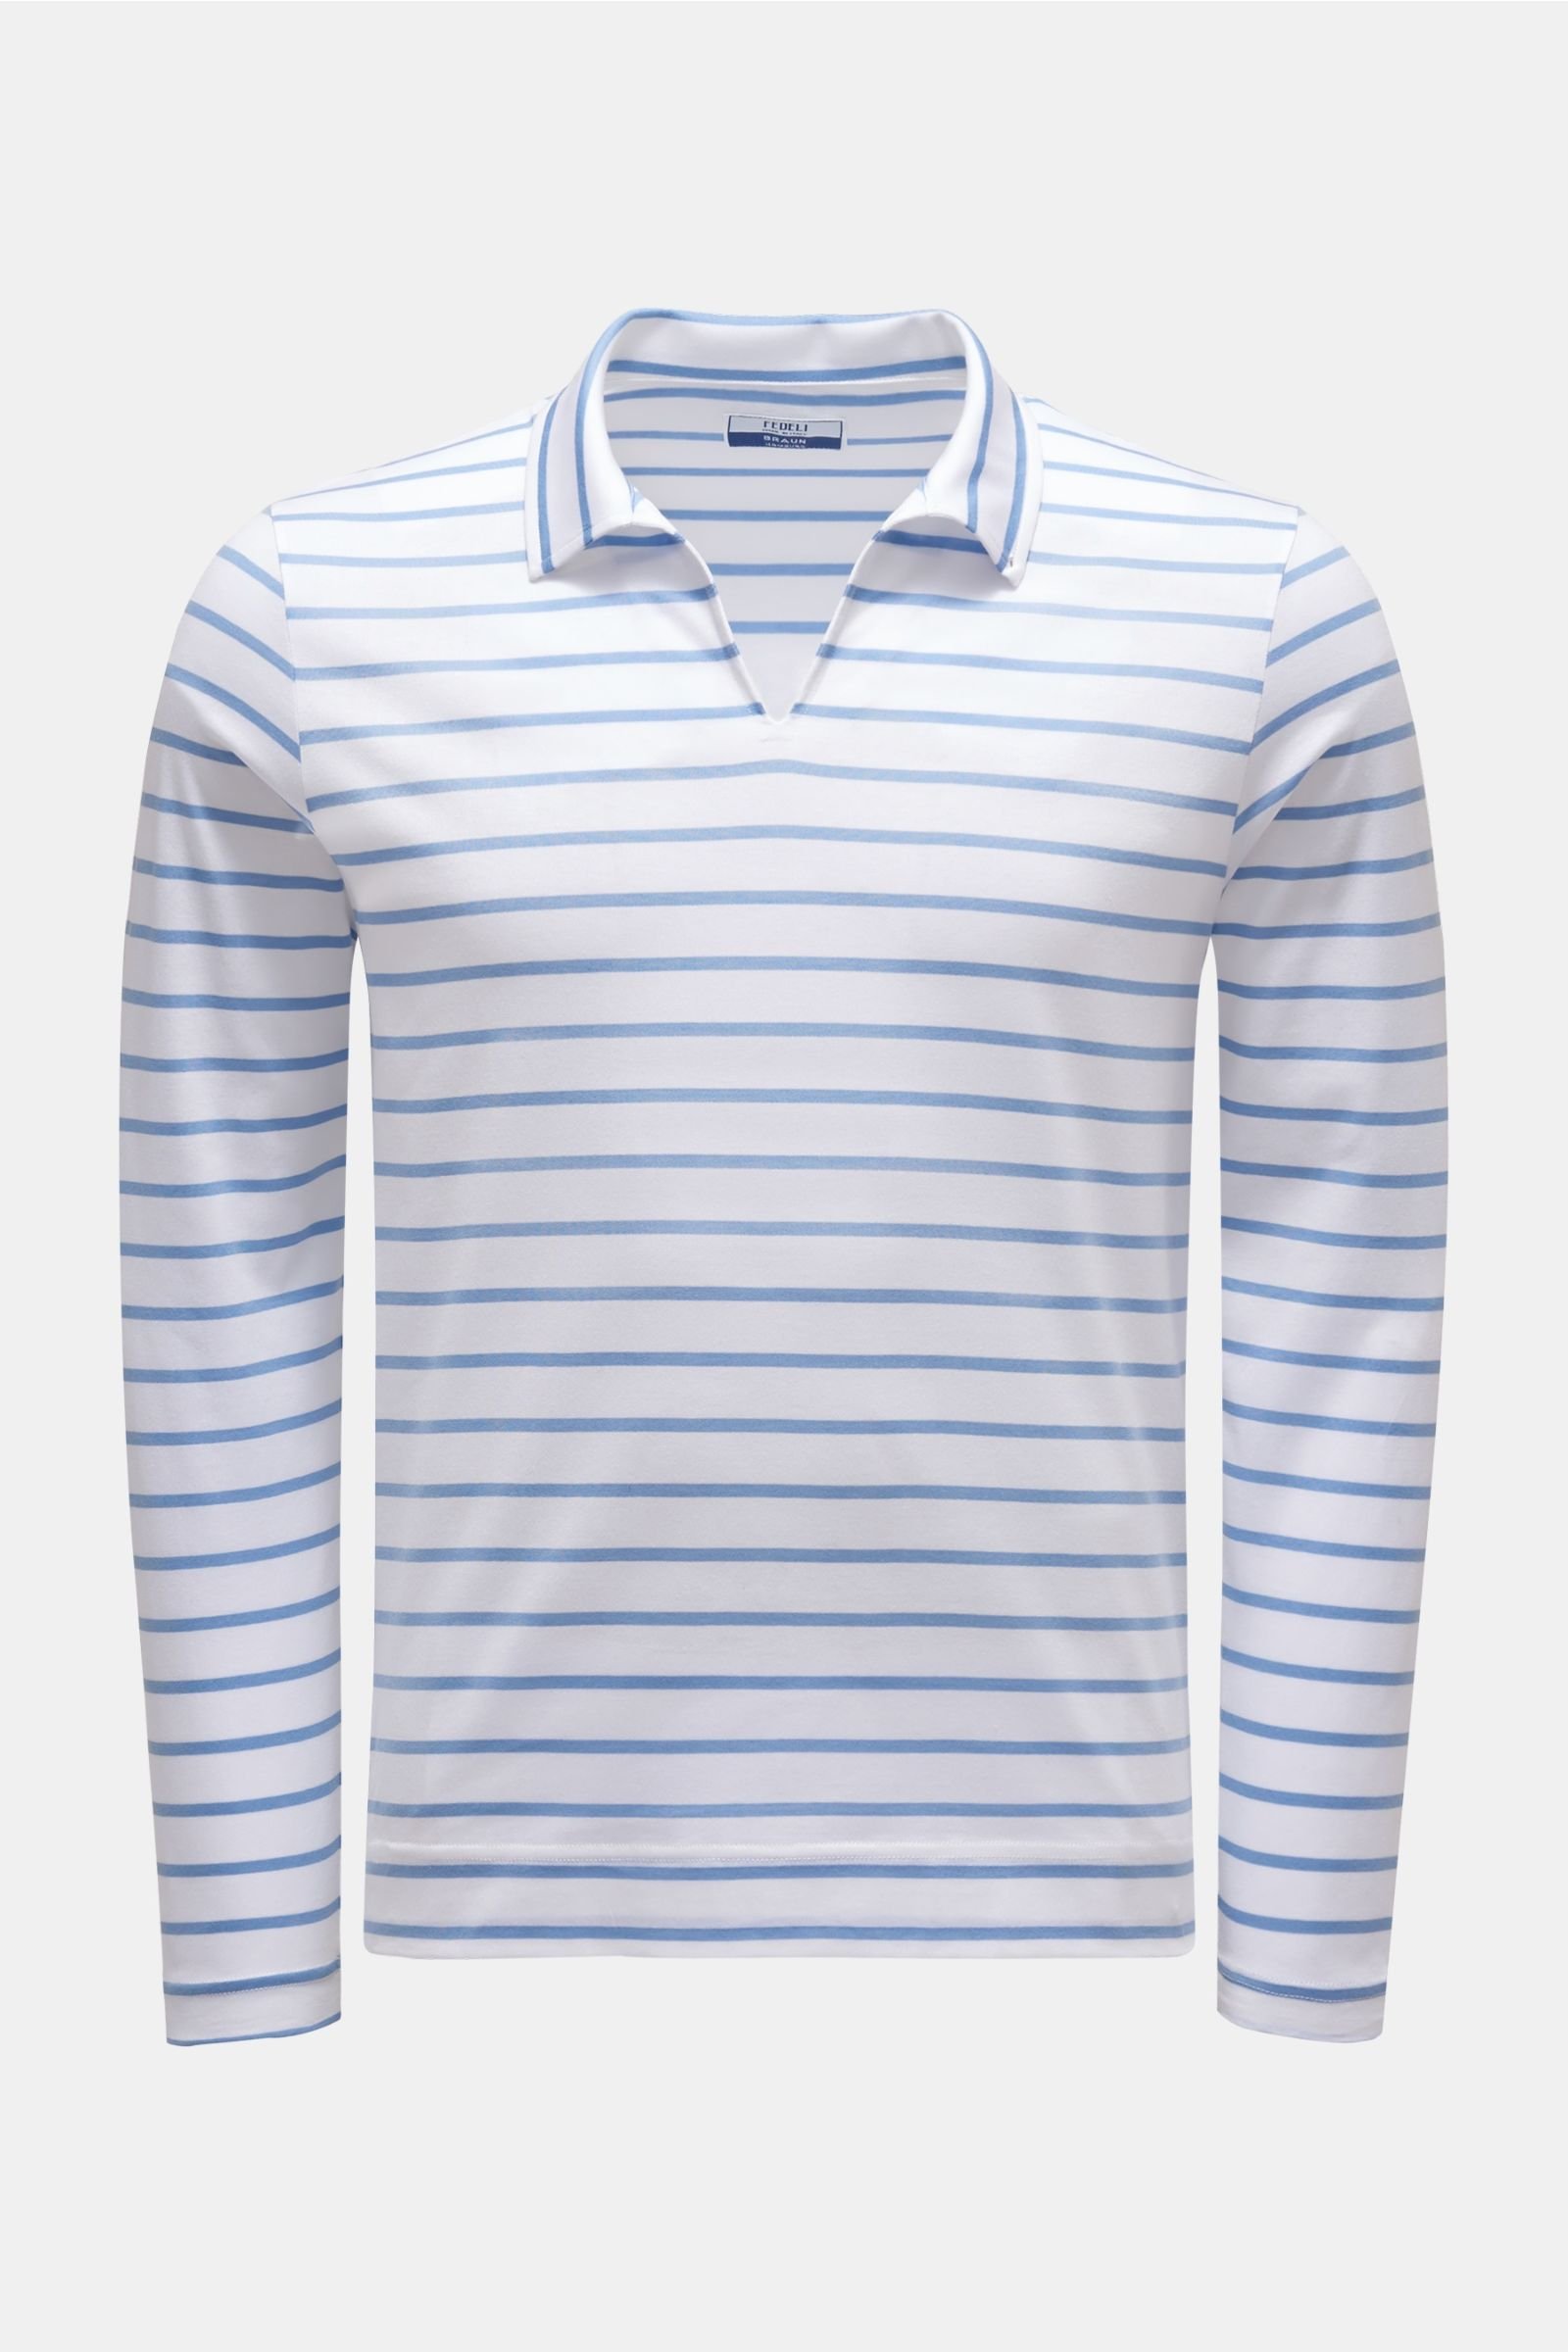 Long sleeve polo shirt 'Peter' grey-blue/white striped